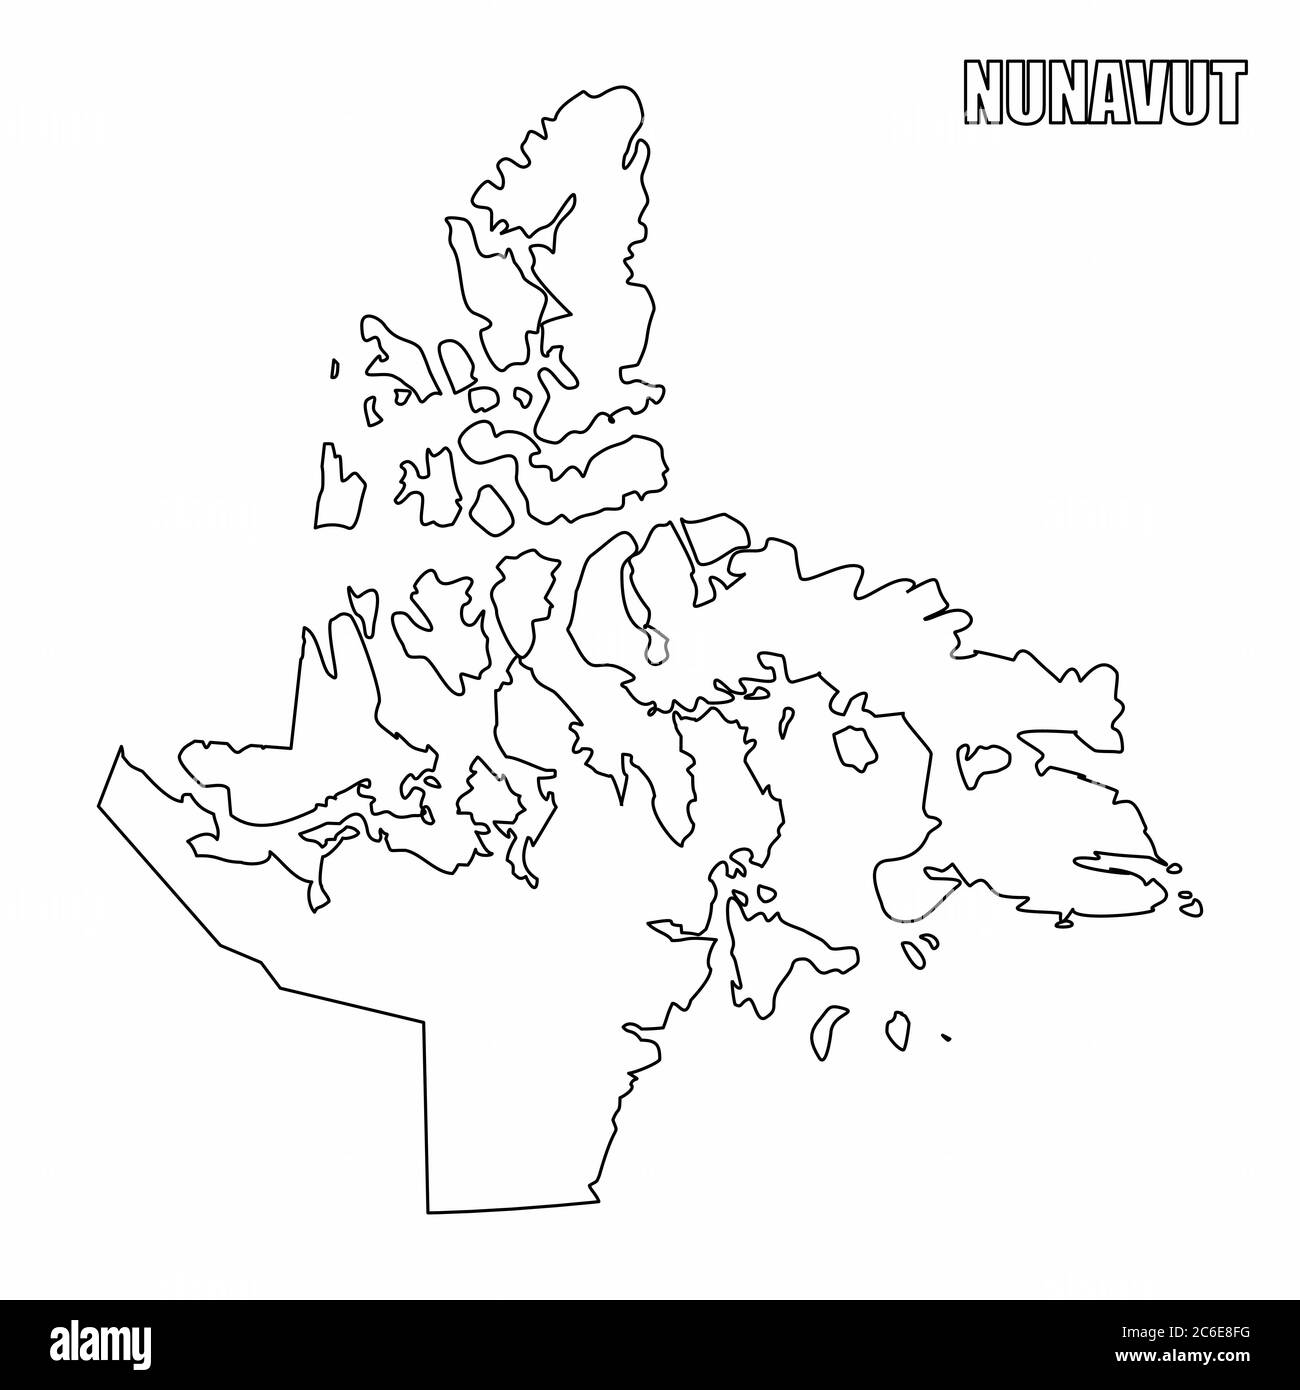 Nunavut Territory Outline Karte Stock Vektor